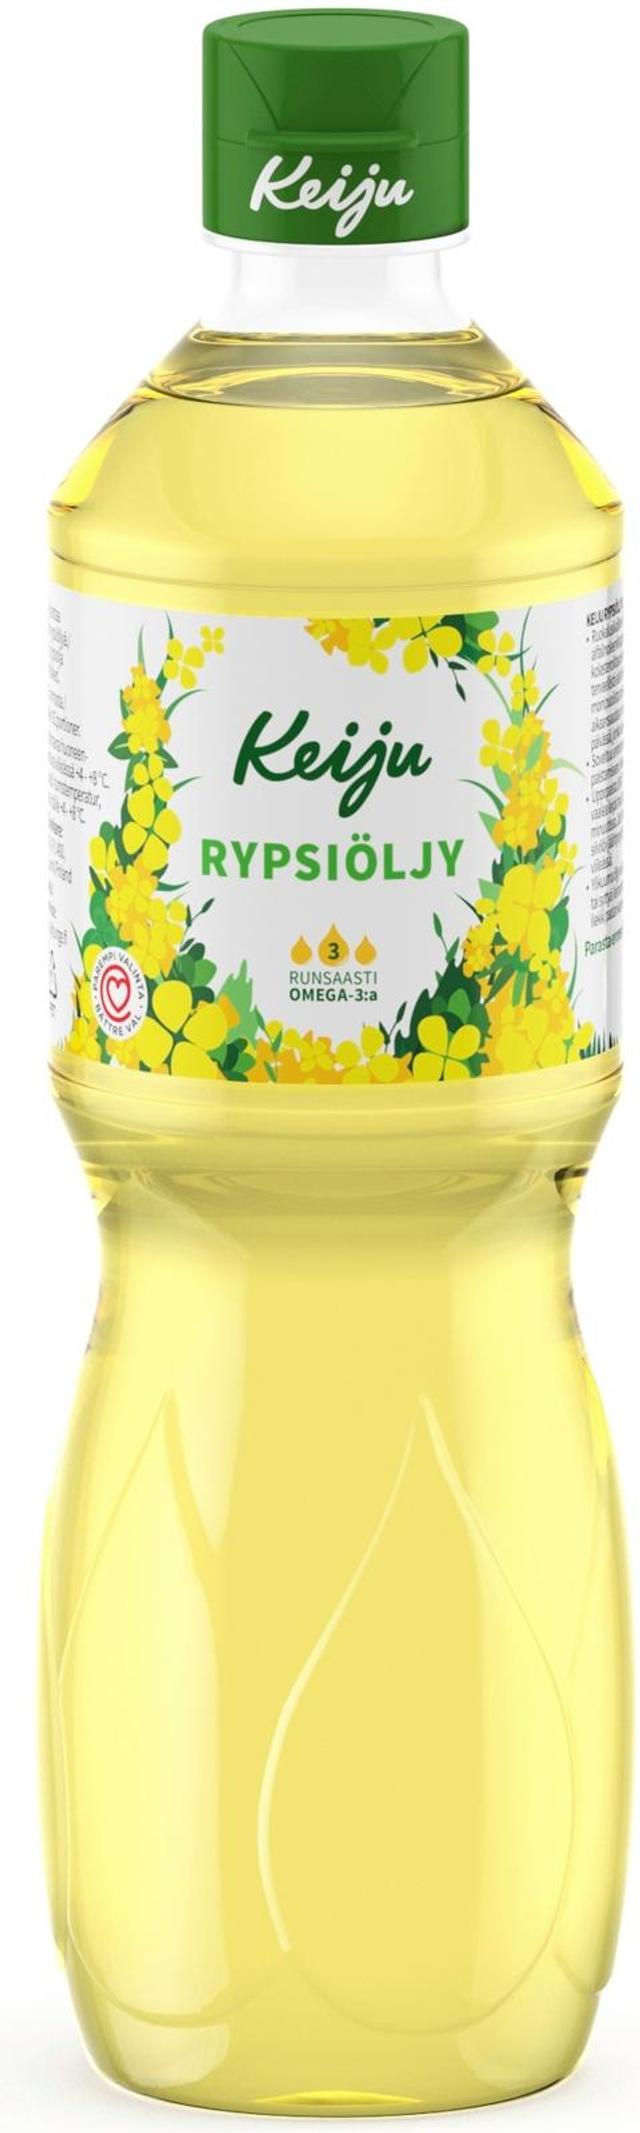 Keiju Rypsiöljy 500 ml